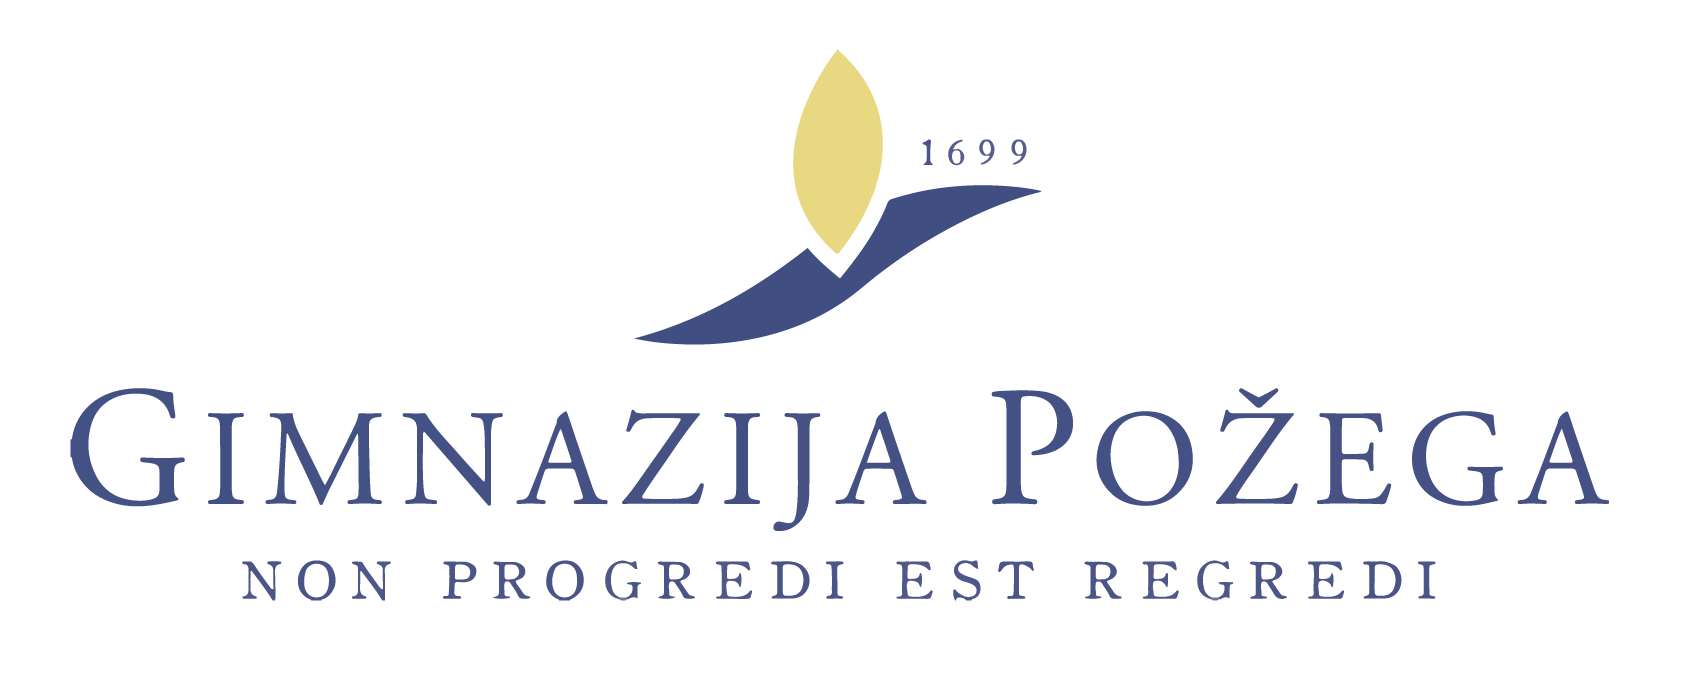 Pozega Gymnasium